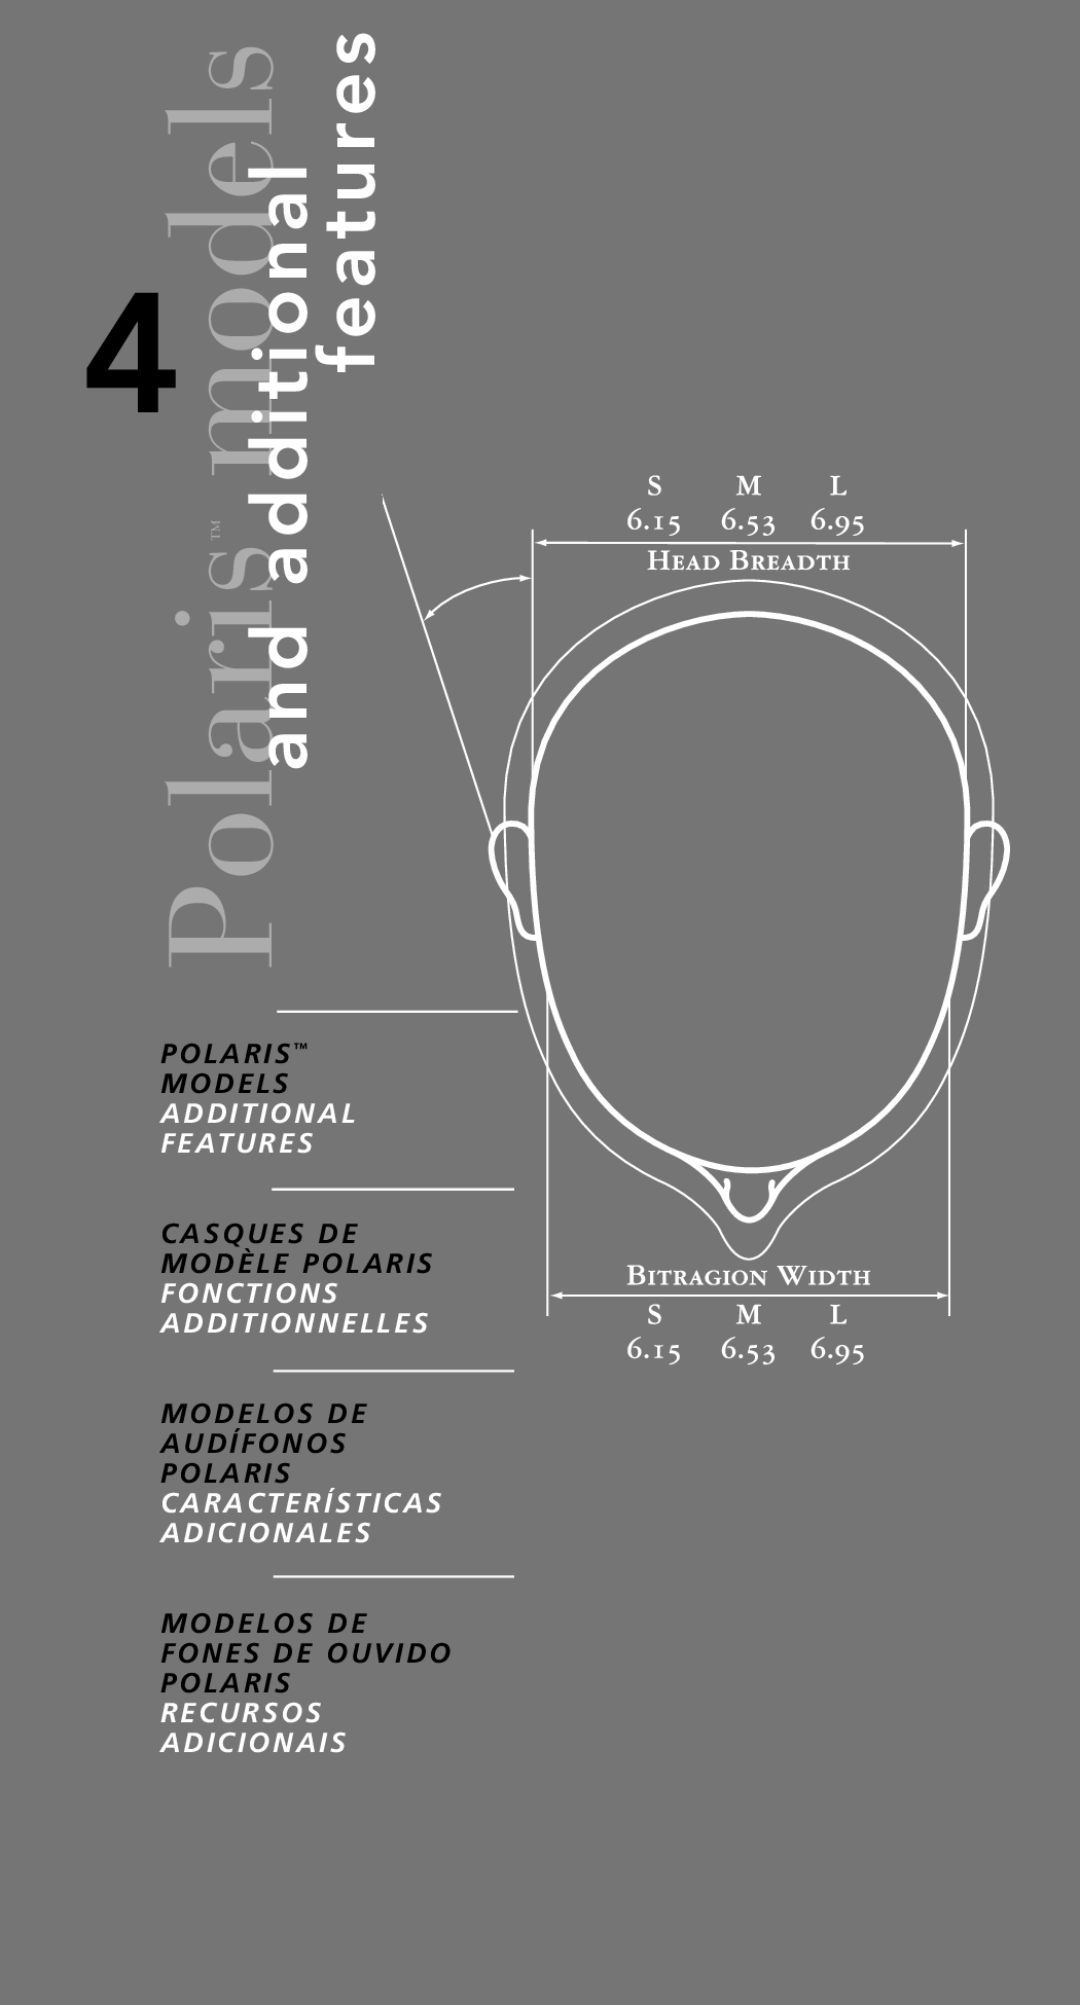 Plantronics TriStar Headset manual Polaris, additional features, P O L A R I S M O D E L S, Additional Features, models 